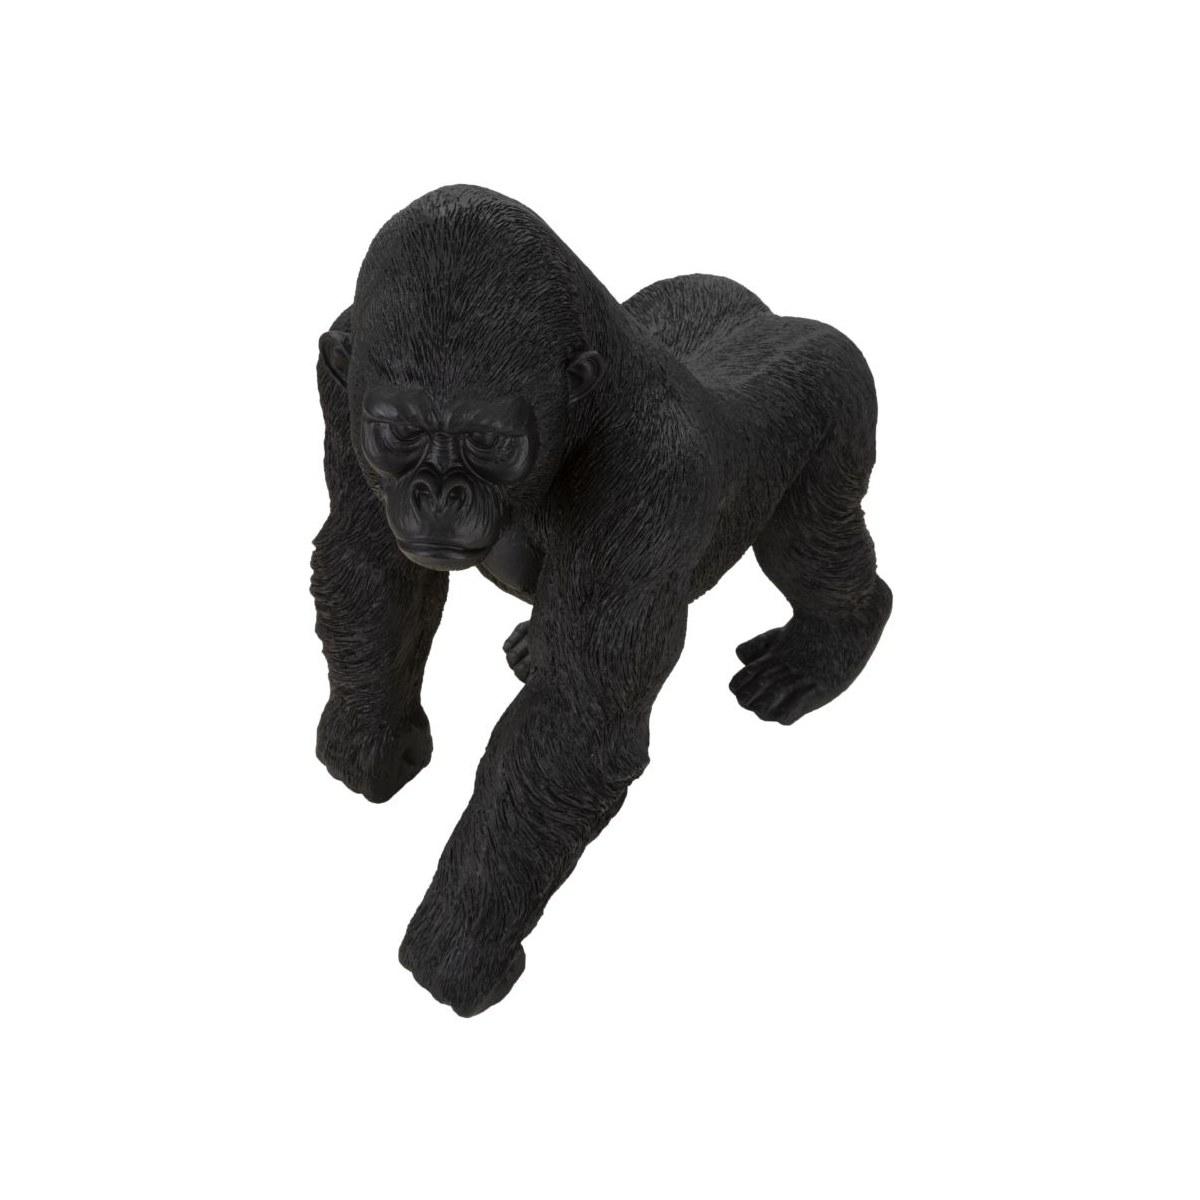 Gorilla Black cm.35x21,5x37,5